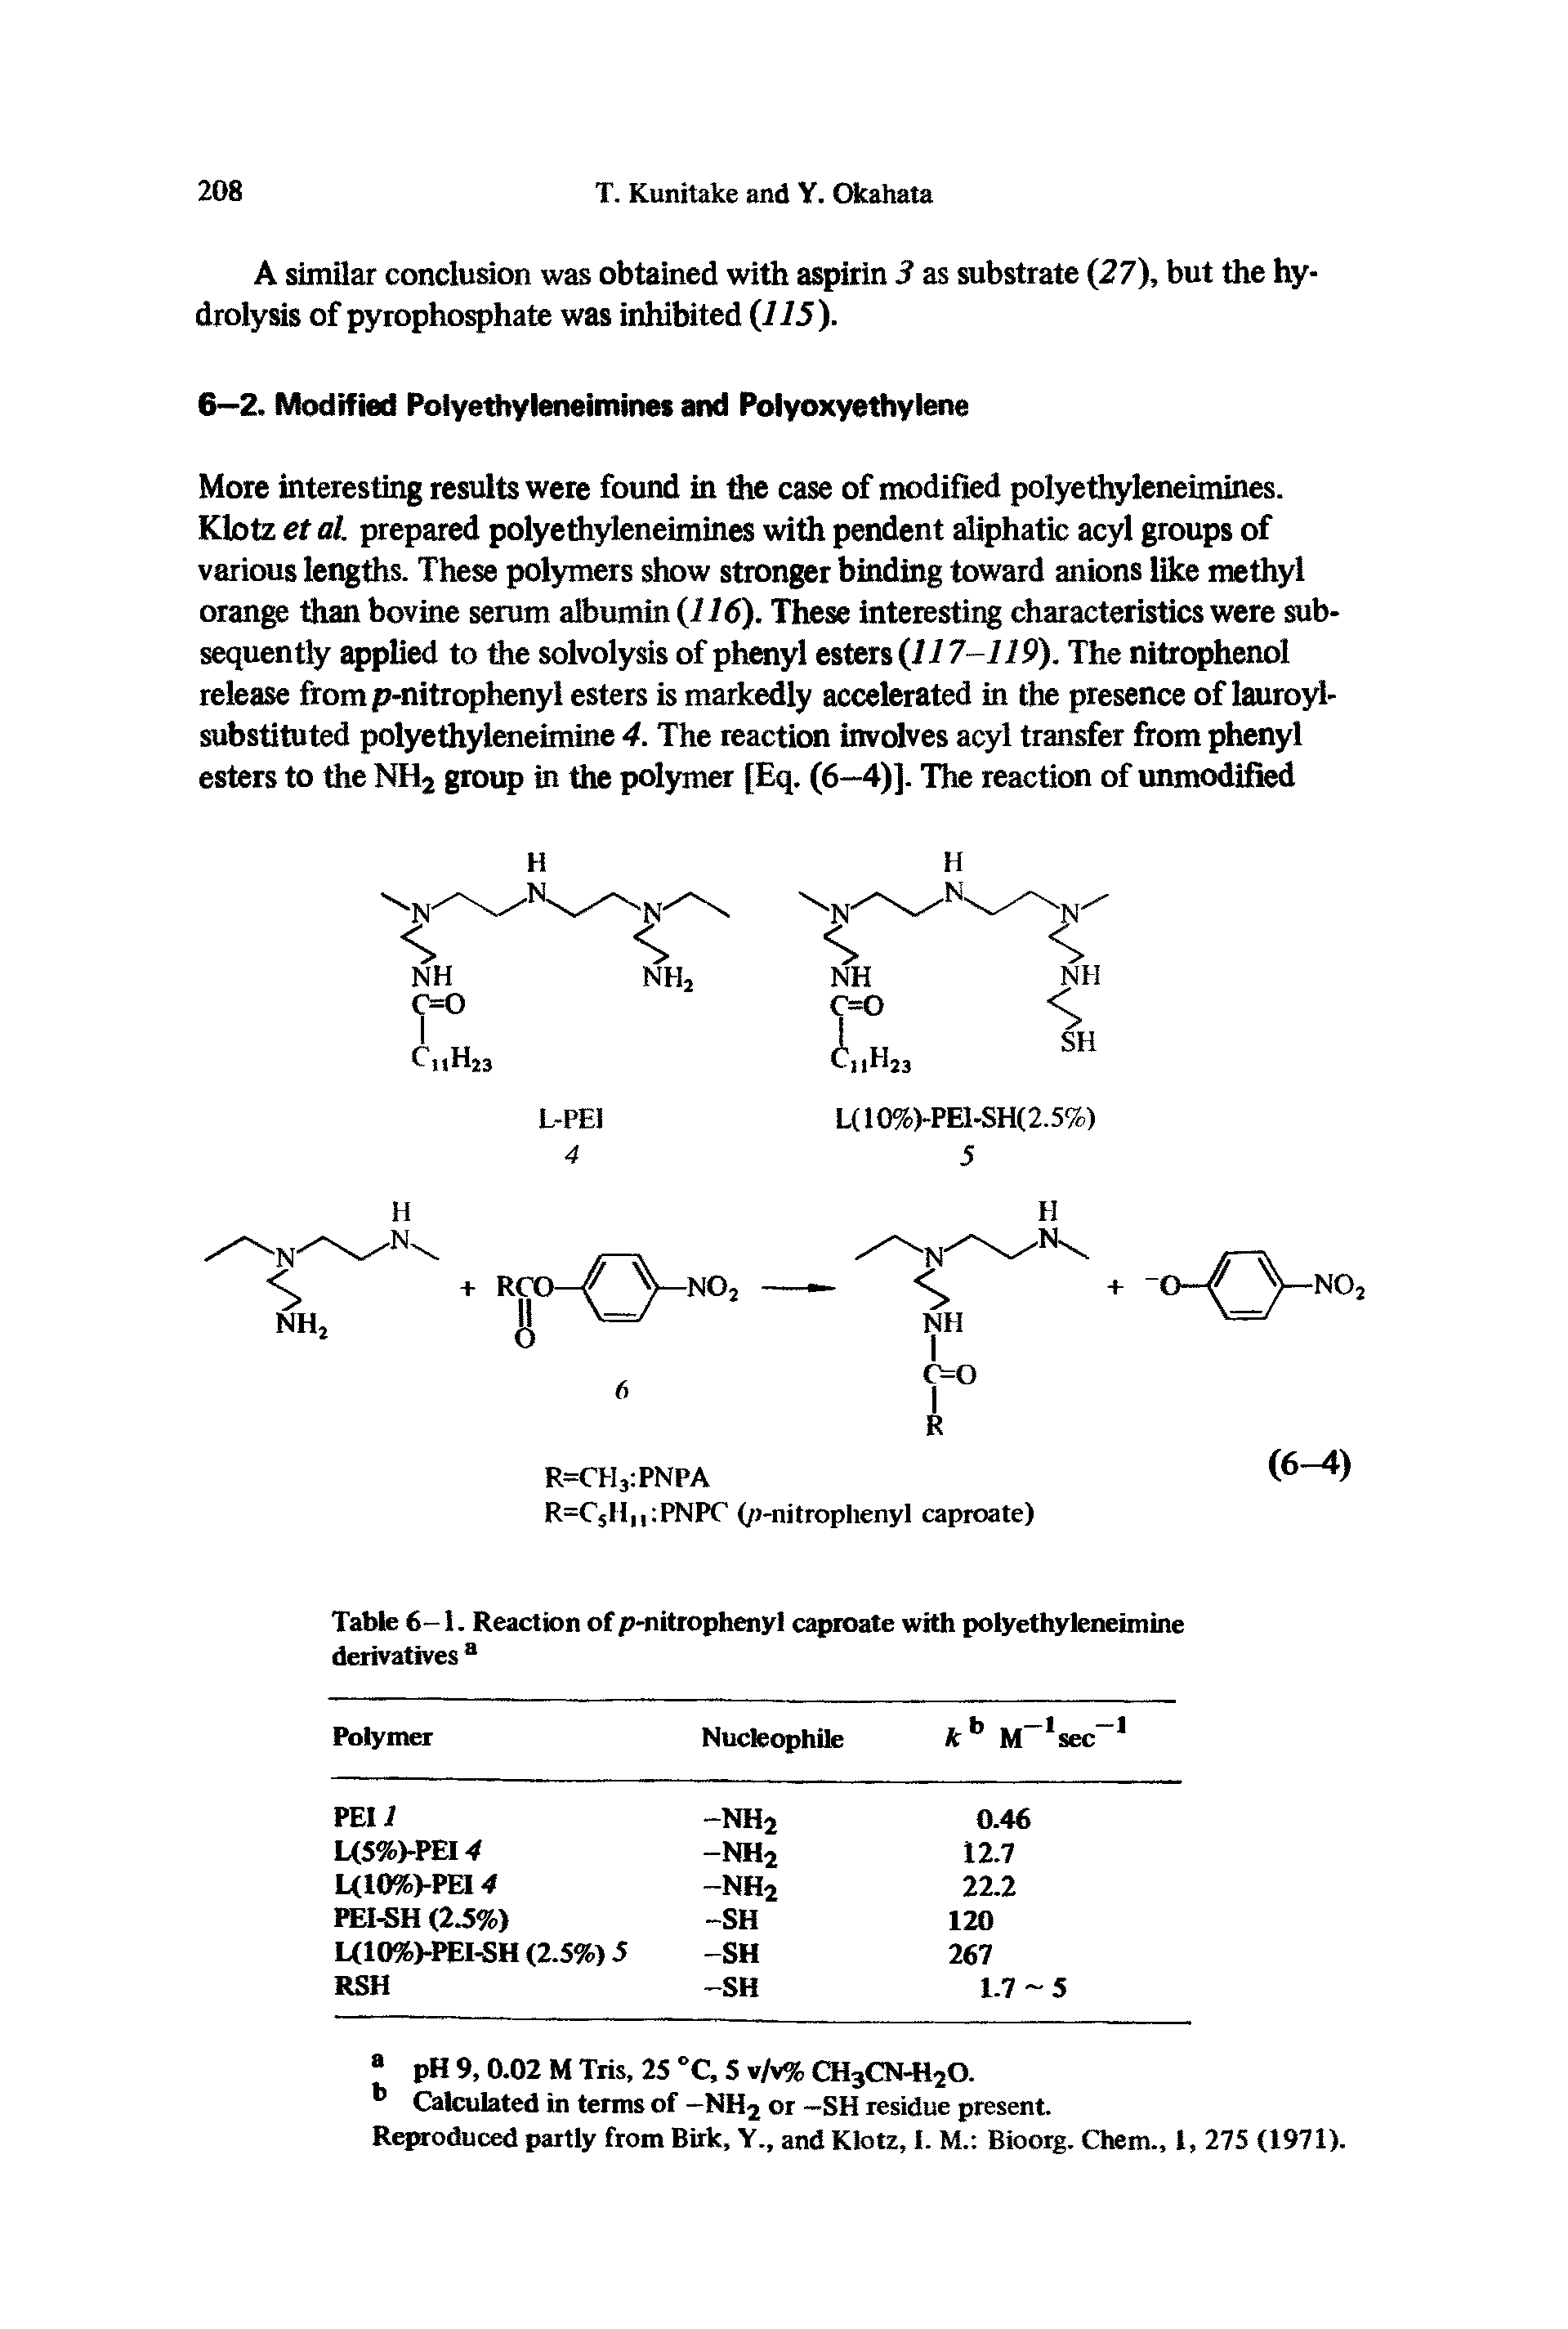 Table 6-1. Reaction of p-nitrophenyl caproate with polyethyleneimine derivatives ...